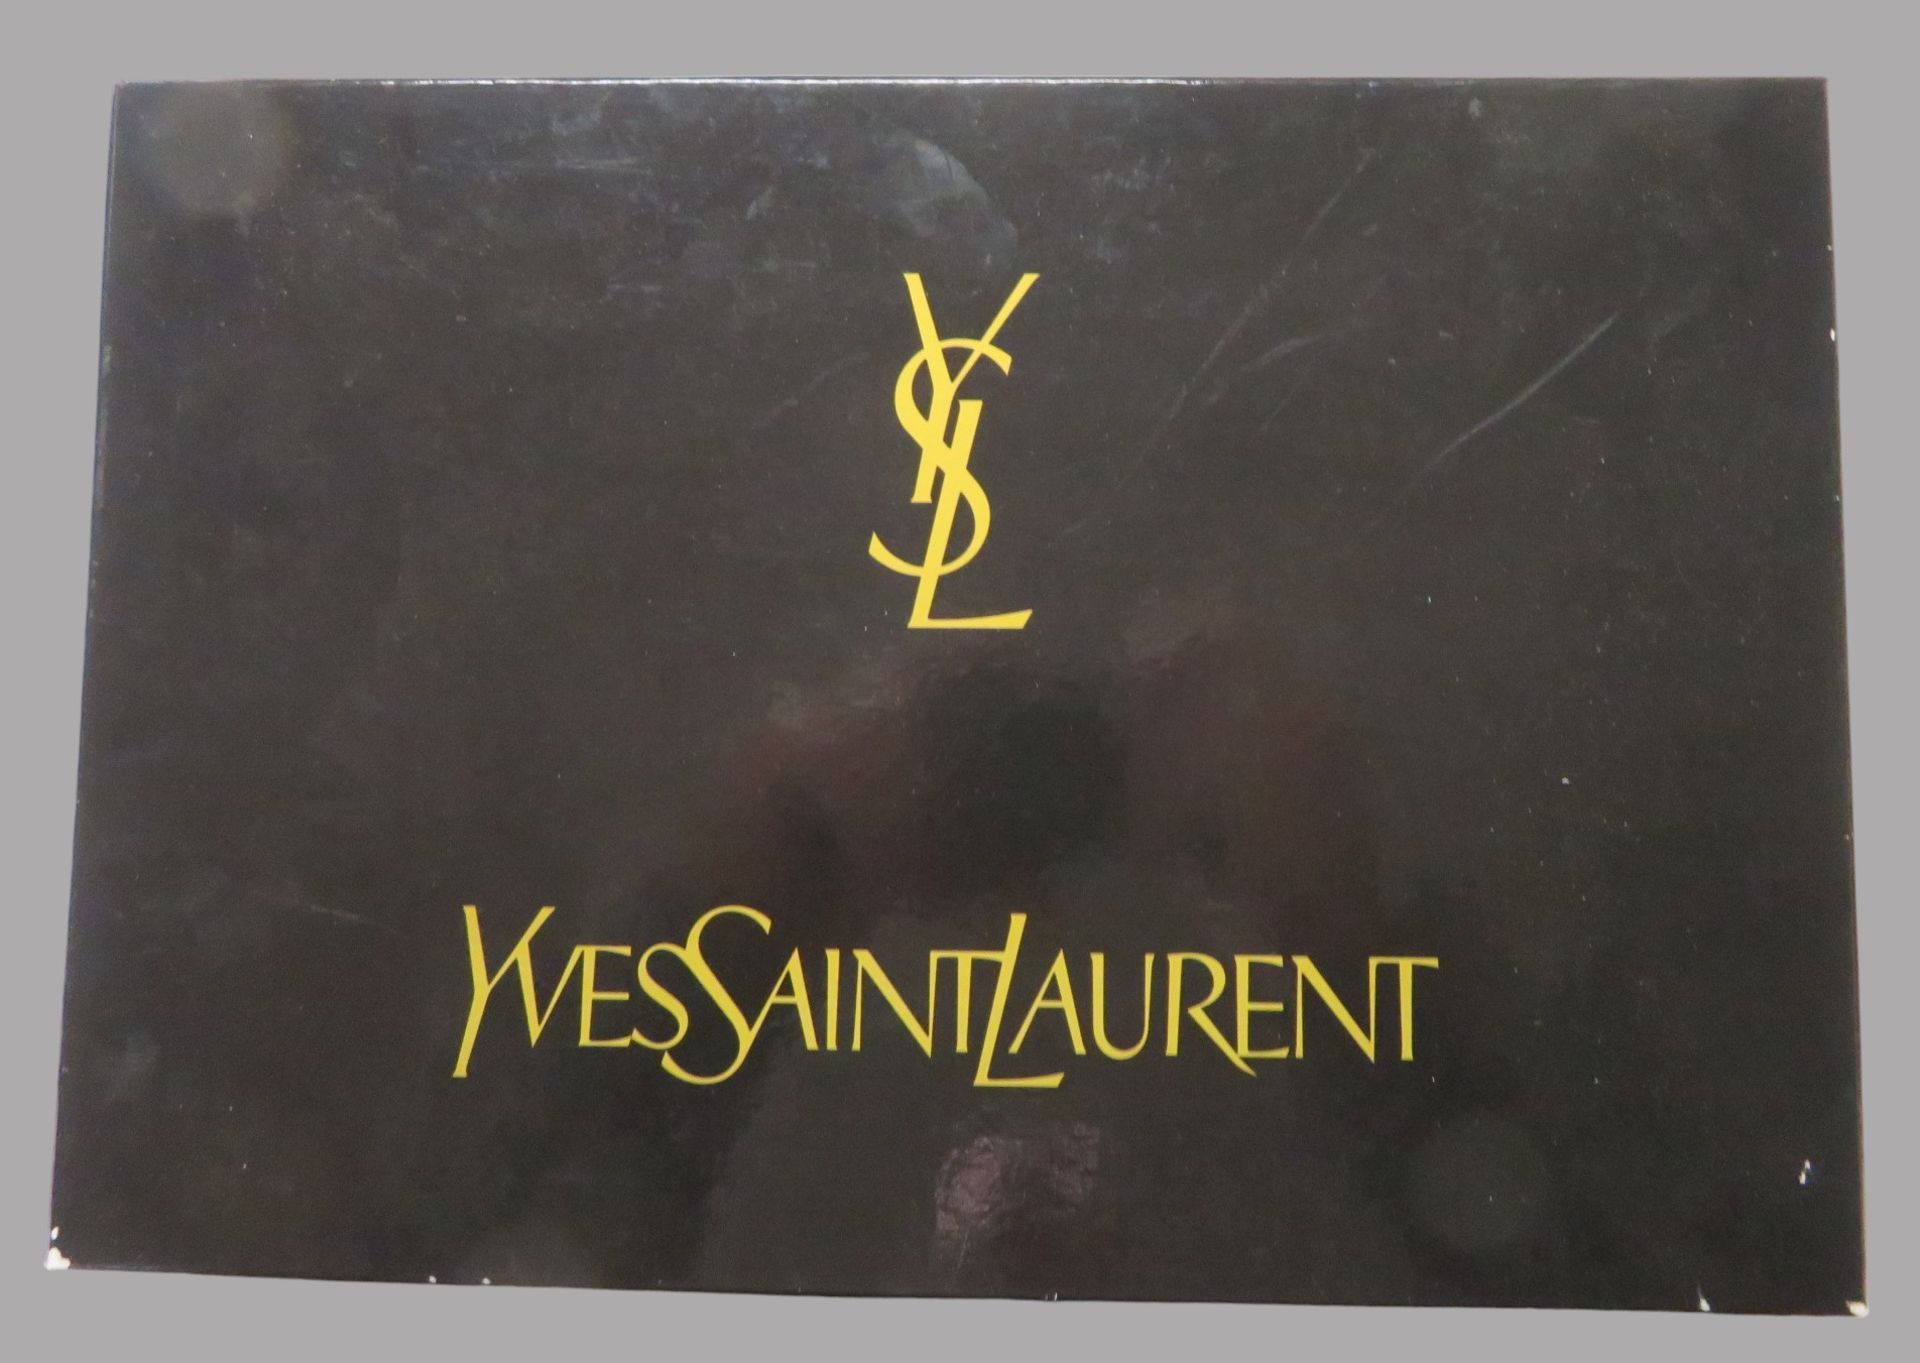 Großes Tuch, Yves Saint Laurent, Paisley-Muster, 35% Seide und 65% Kaschmir, sign., OVP, 140 x 137  - Bild 3 aus 3